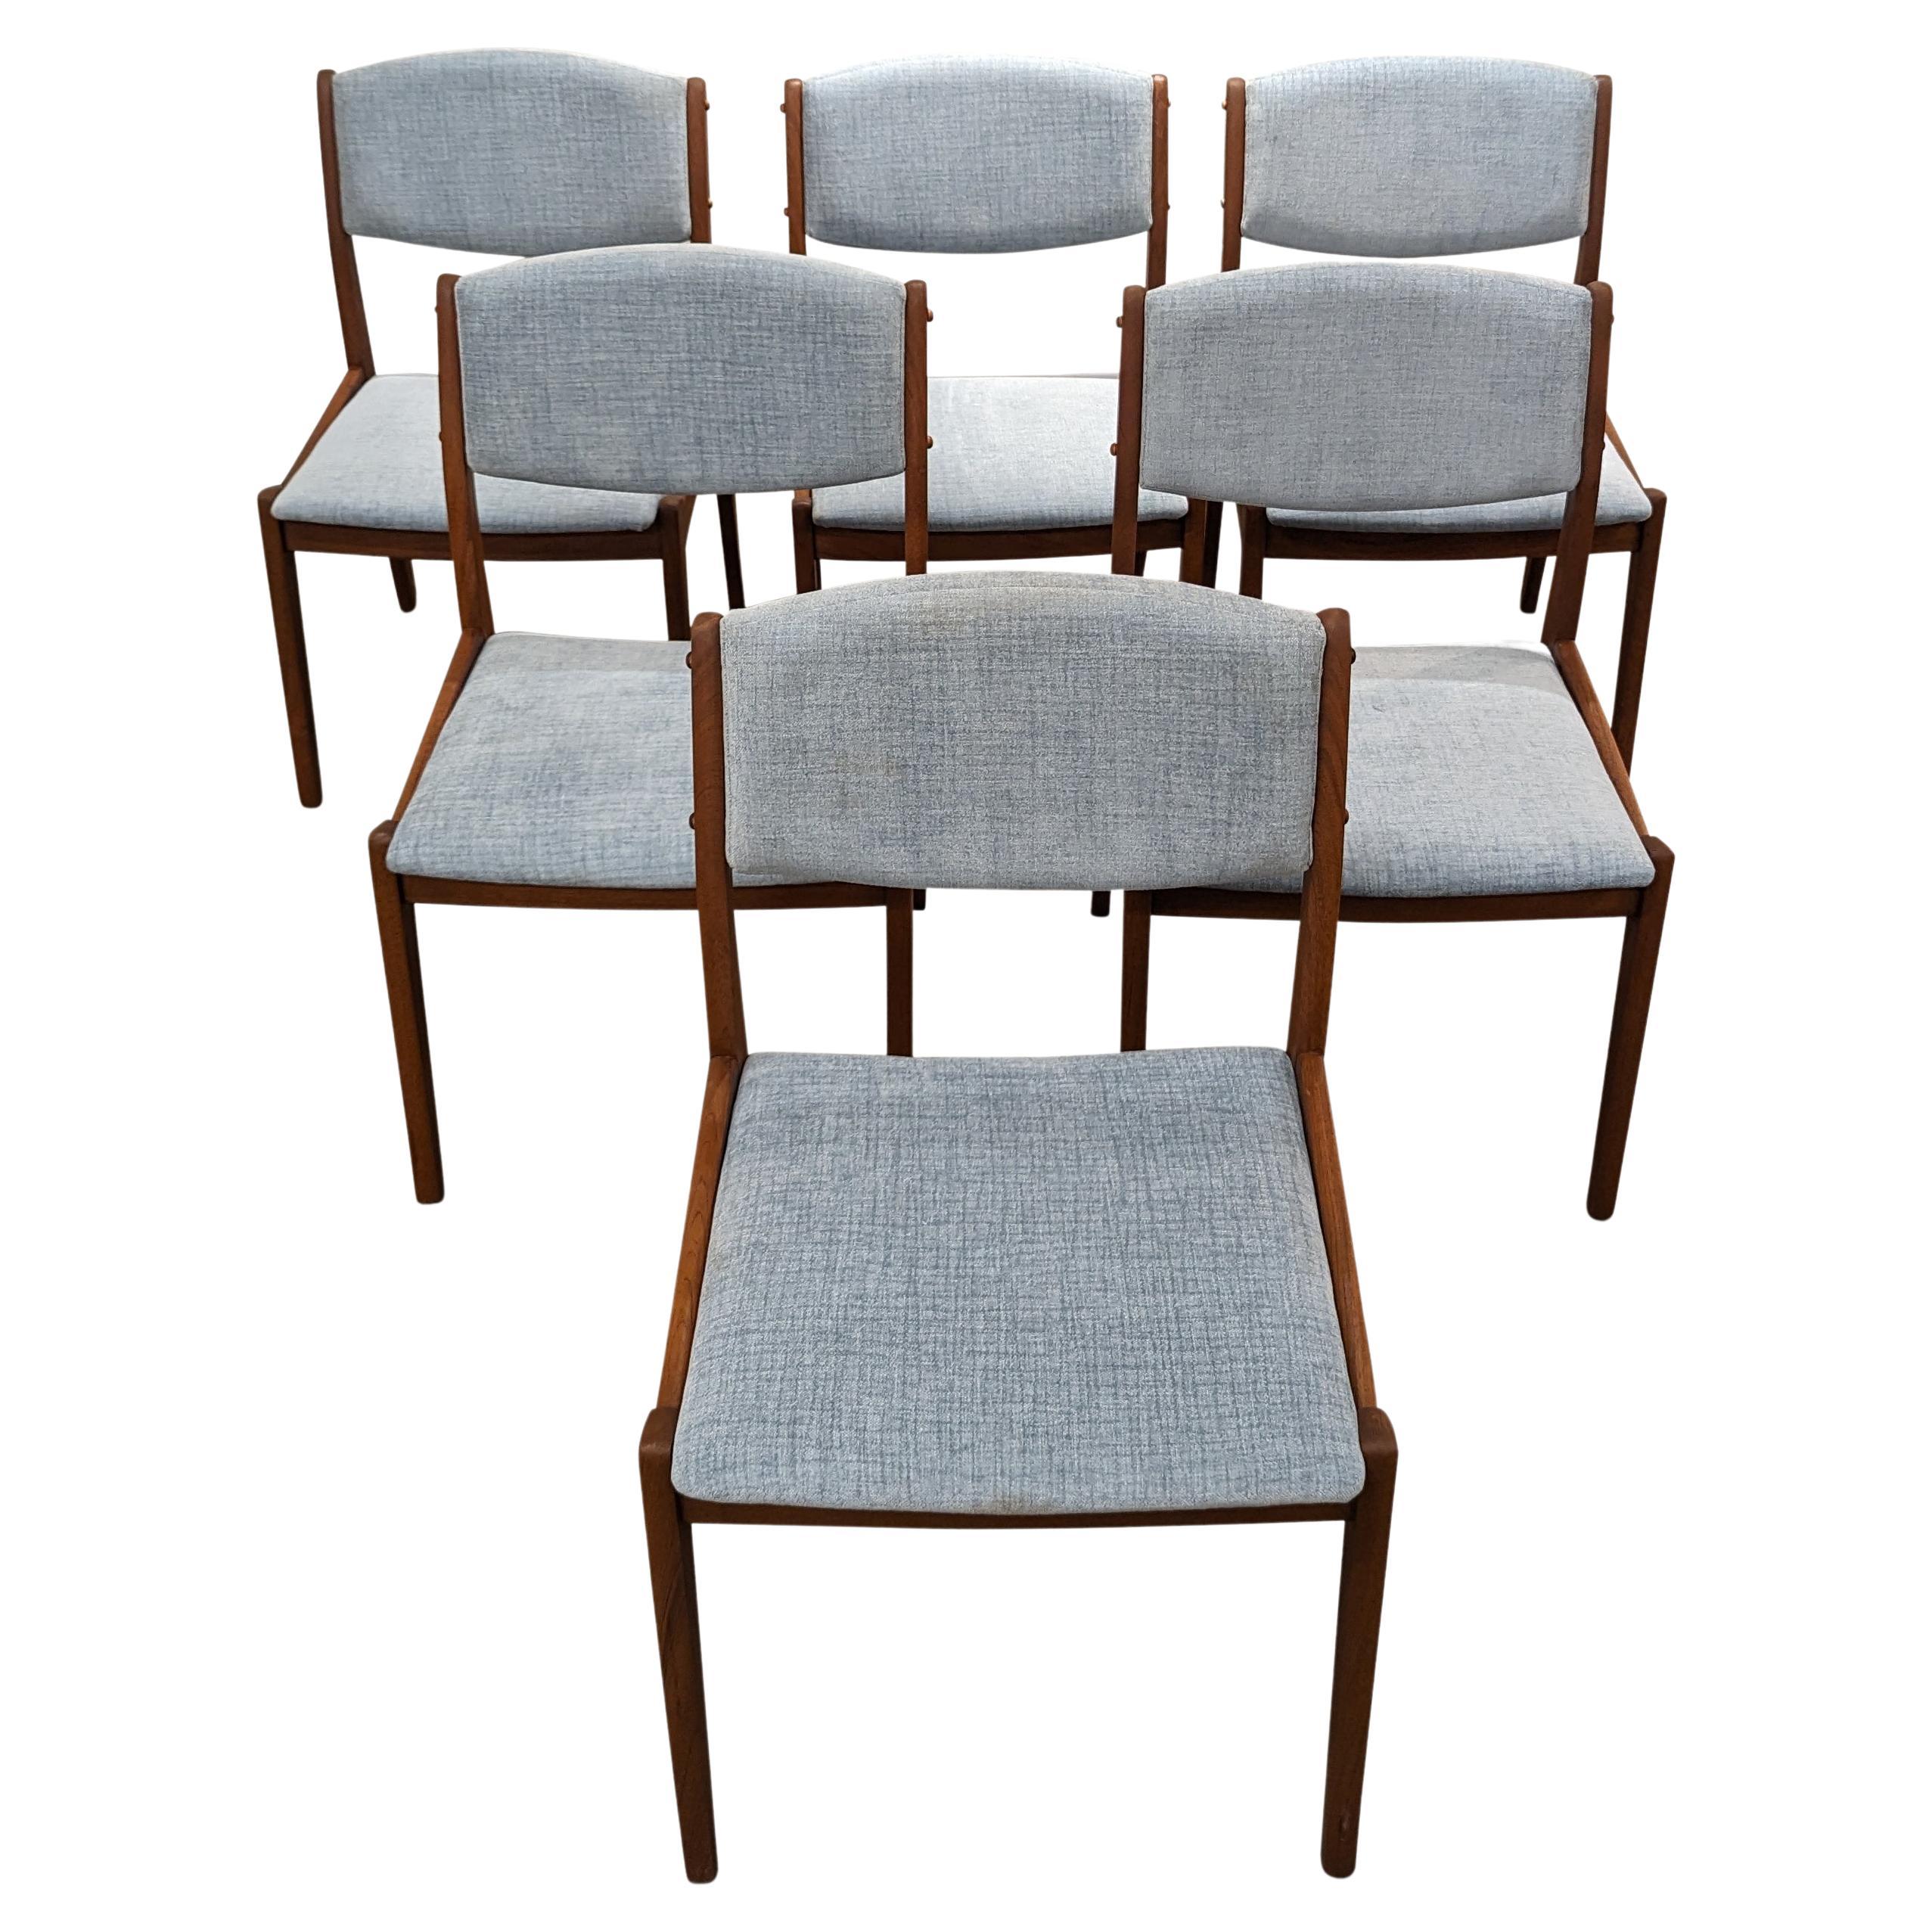 6 Orum Mobelfabrik Dining Chairs - 0224128 Vintage Danish Mid Century